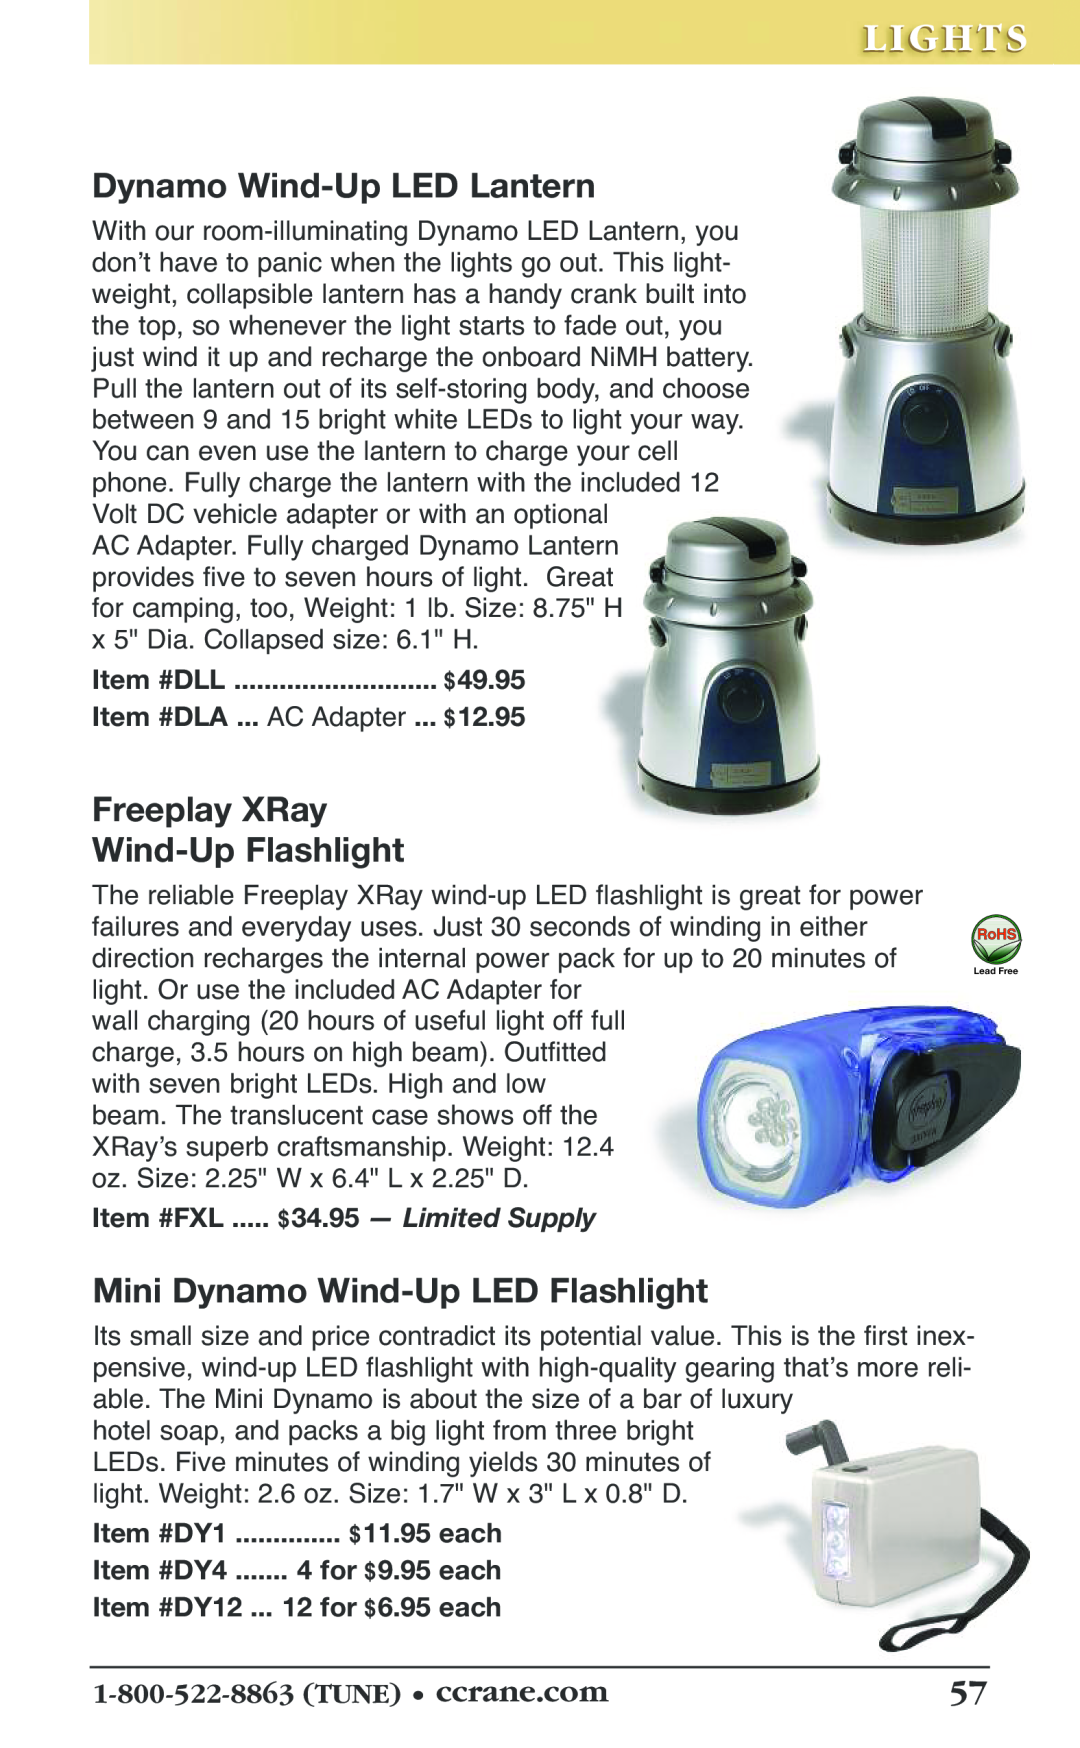 C. Crane 19f Dynamo Wind-UpLED Lantern, Freeplay XRay Wind-UpFlashlight, Mini Dynamo Wind-UpLED Flashlight, Lights, $12.95 